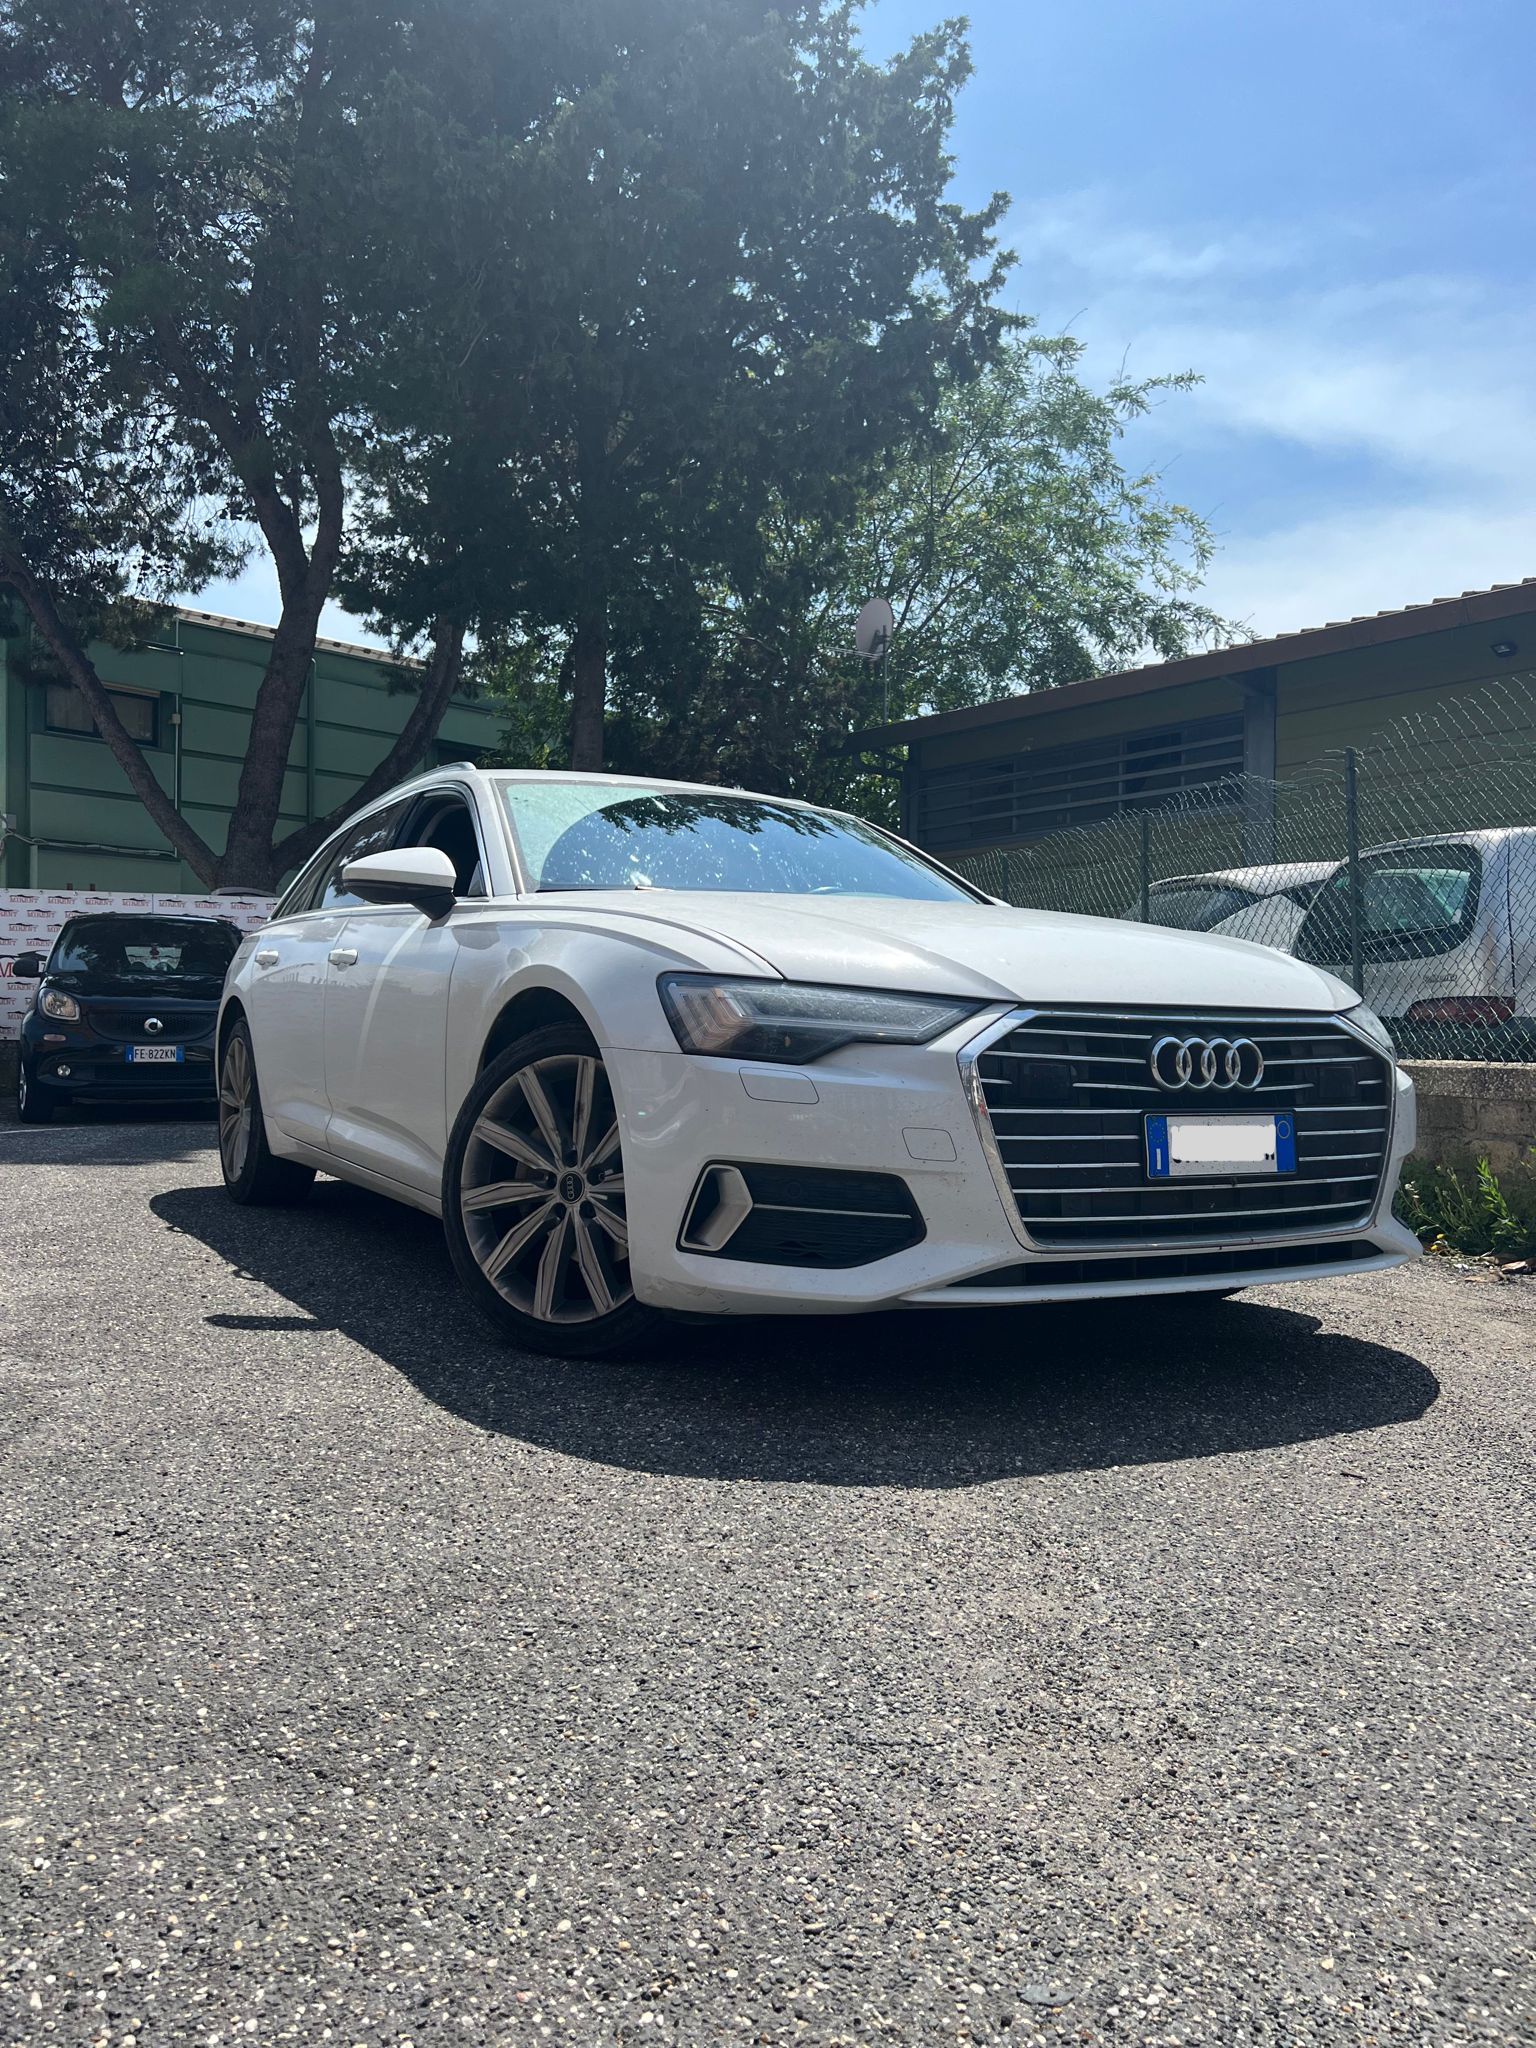 Noleggio Auto Audi A6 Roma